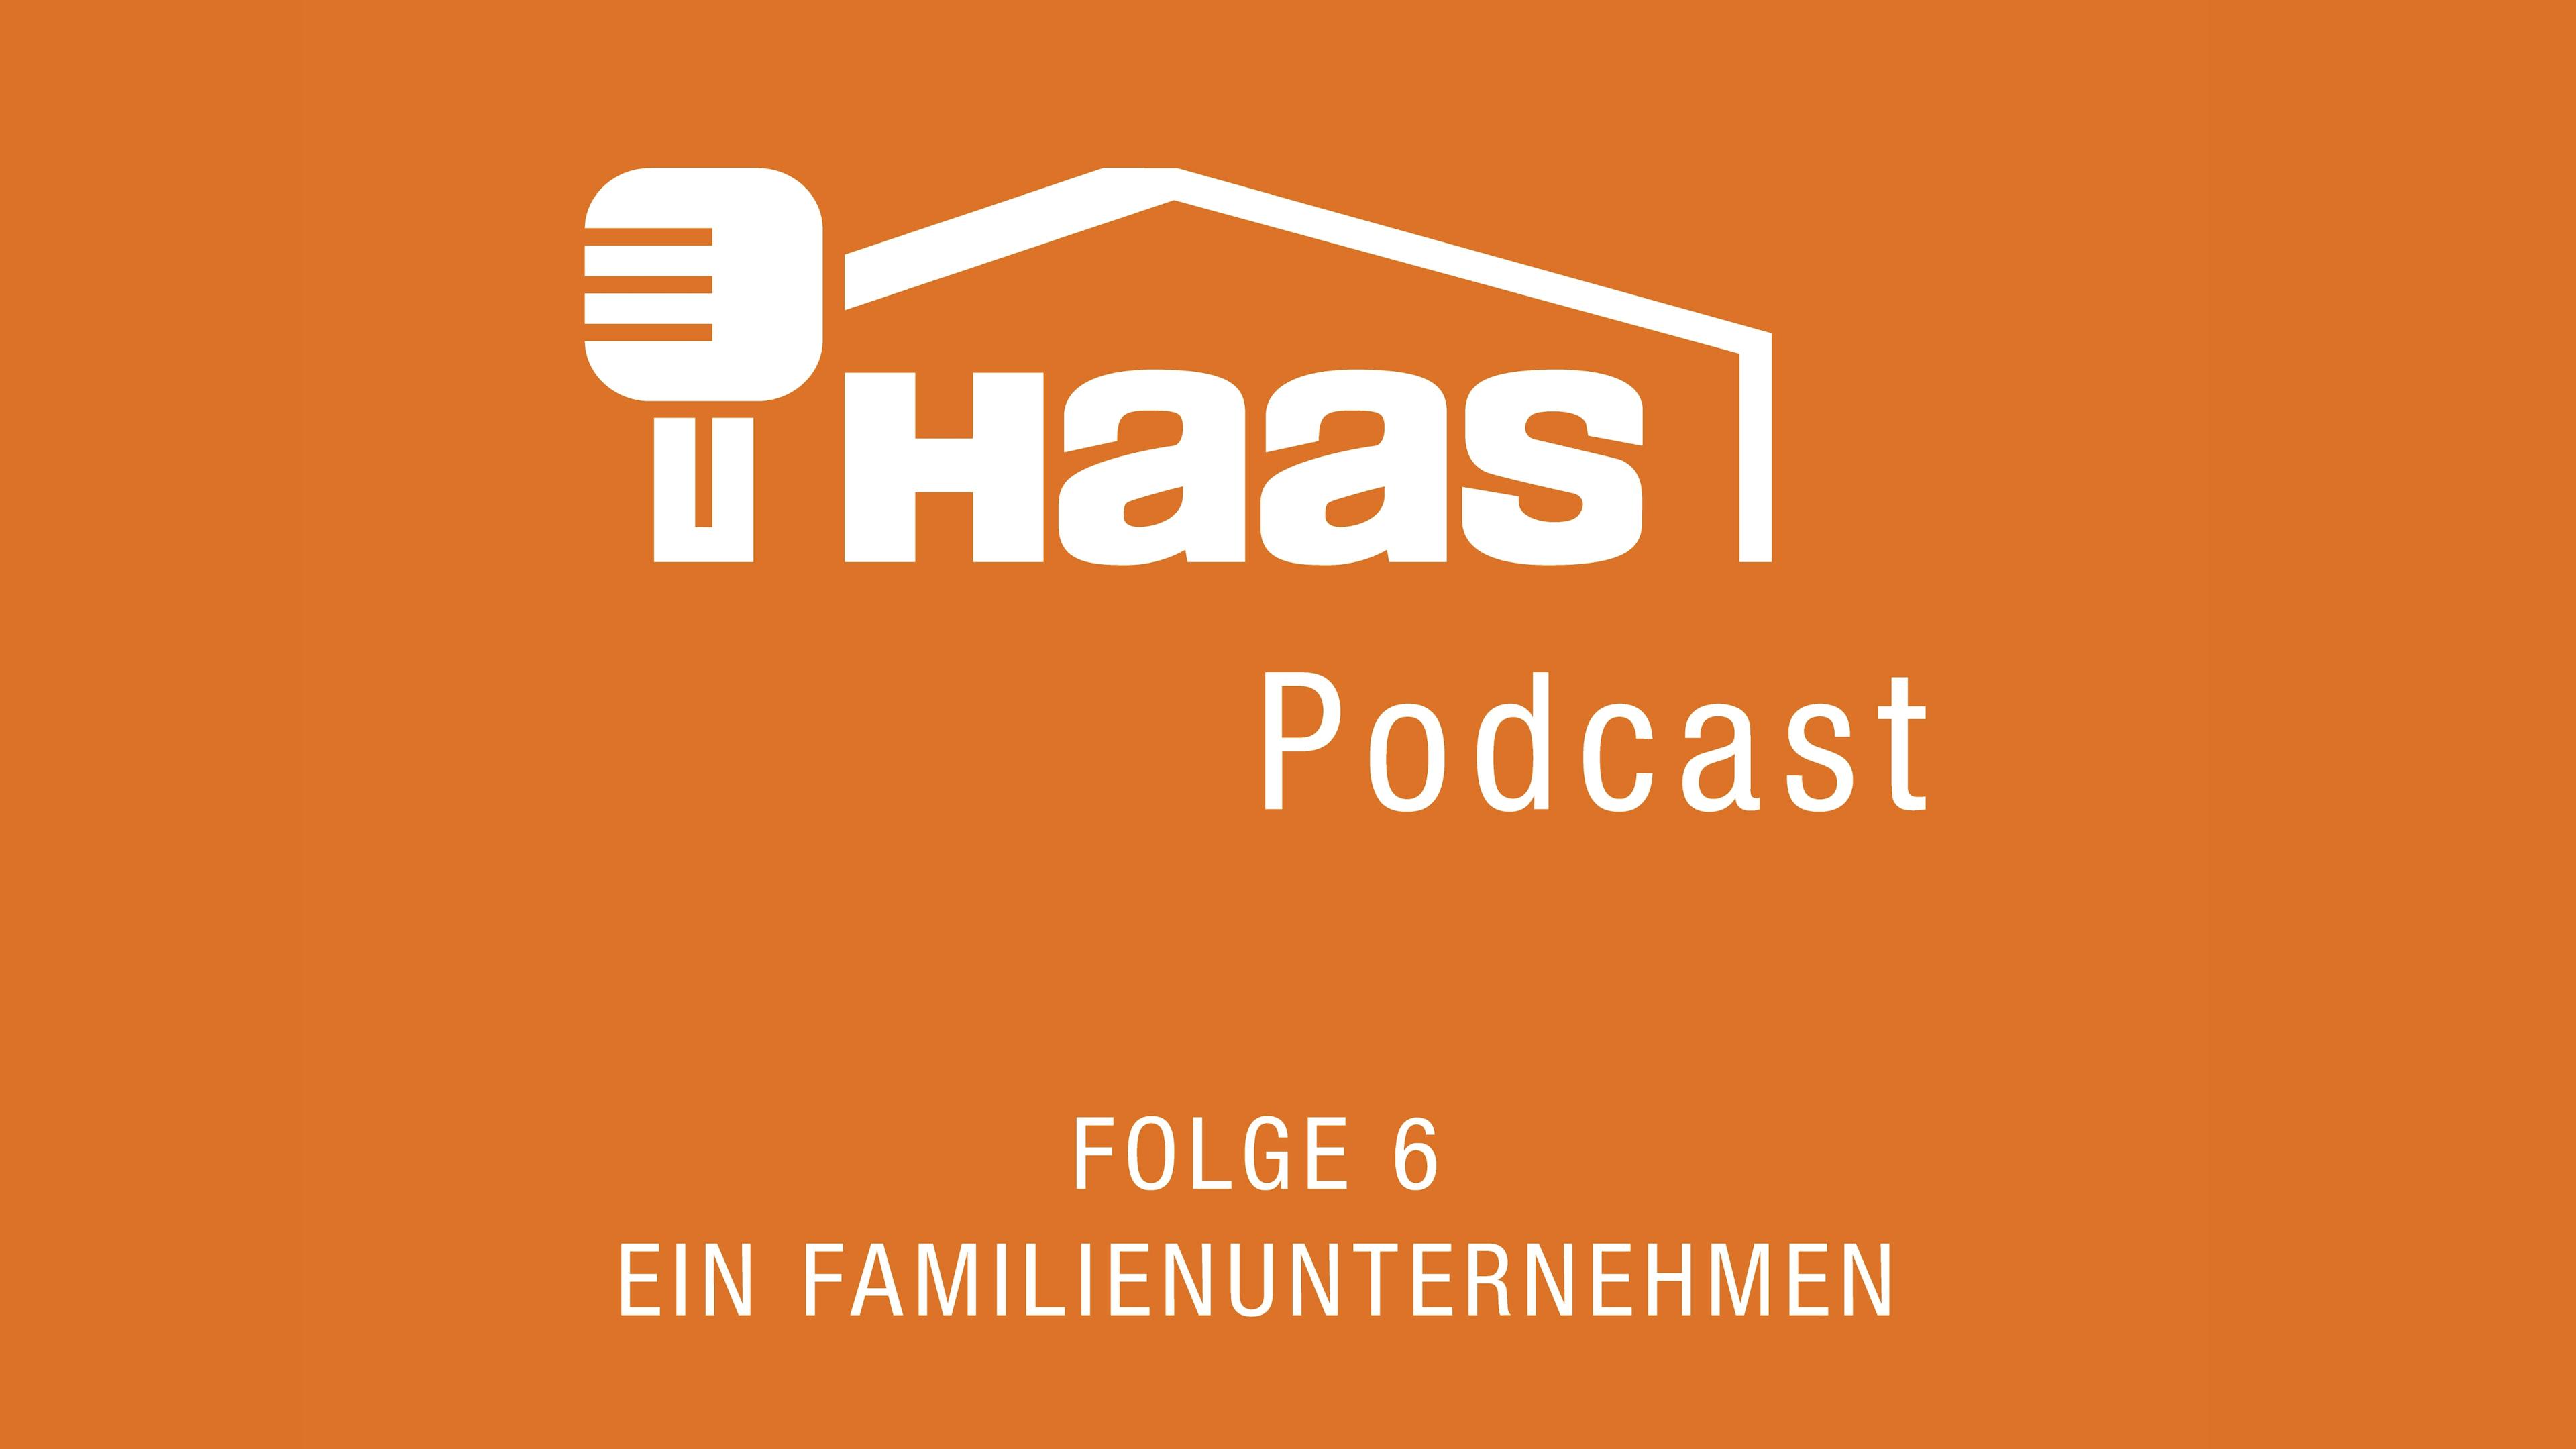 Haas Fertigbau Podcast aus einem Holz geschnitzt Folge 6